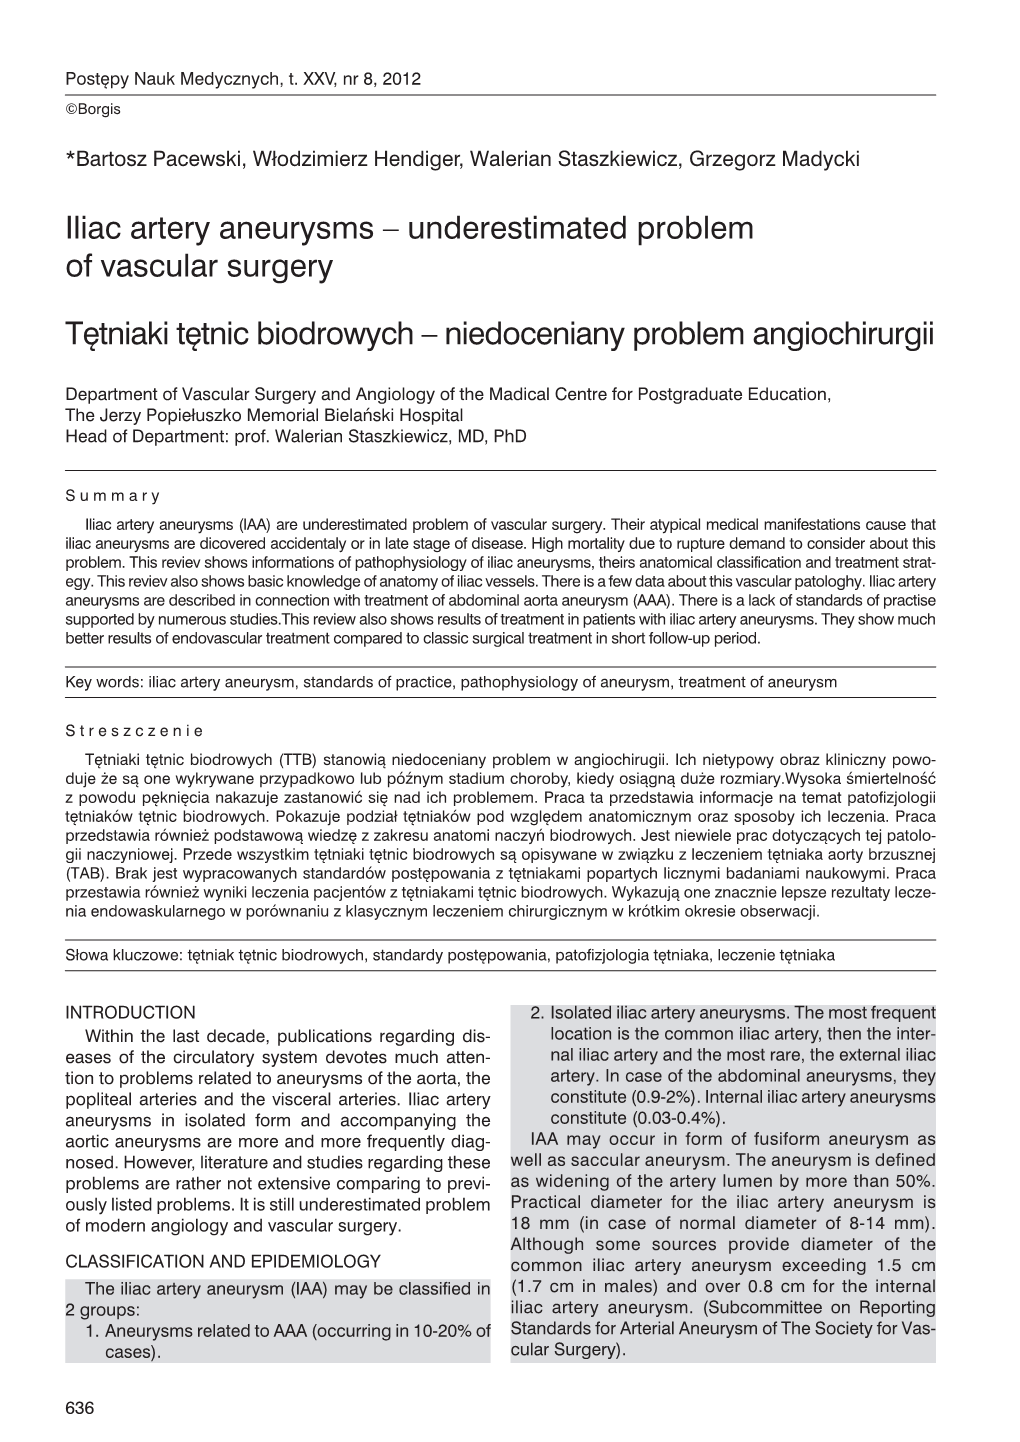 Iliac Artery Aneurysms – Underestimated Problem of Vascular Surgery